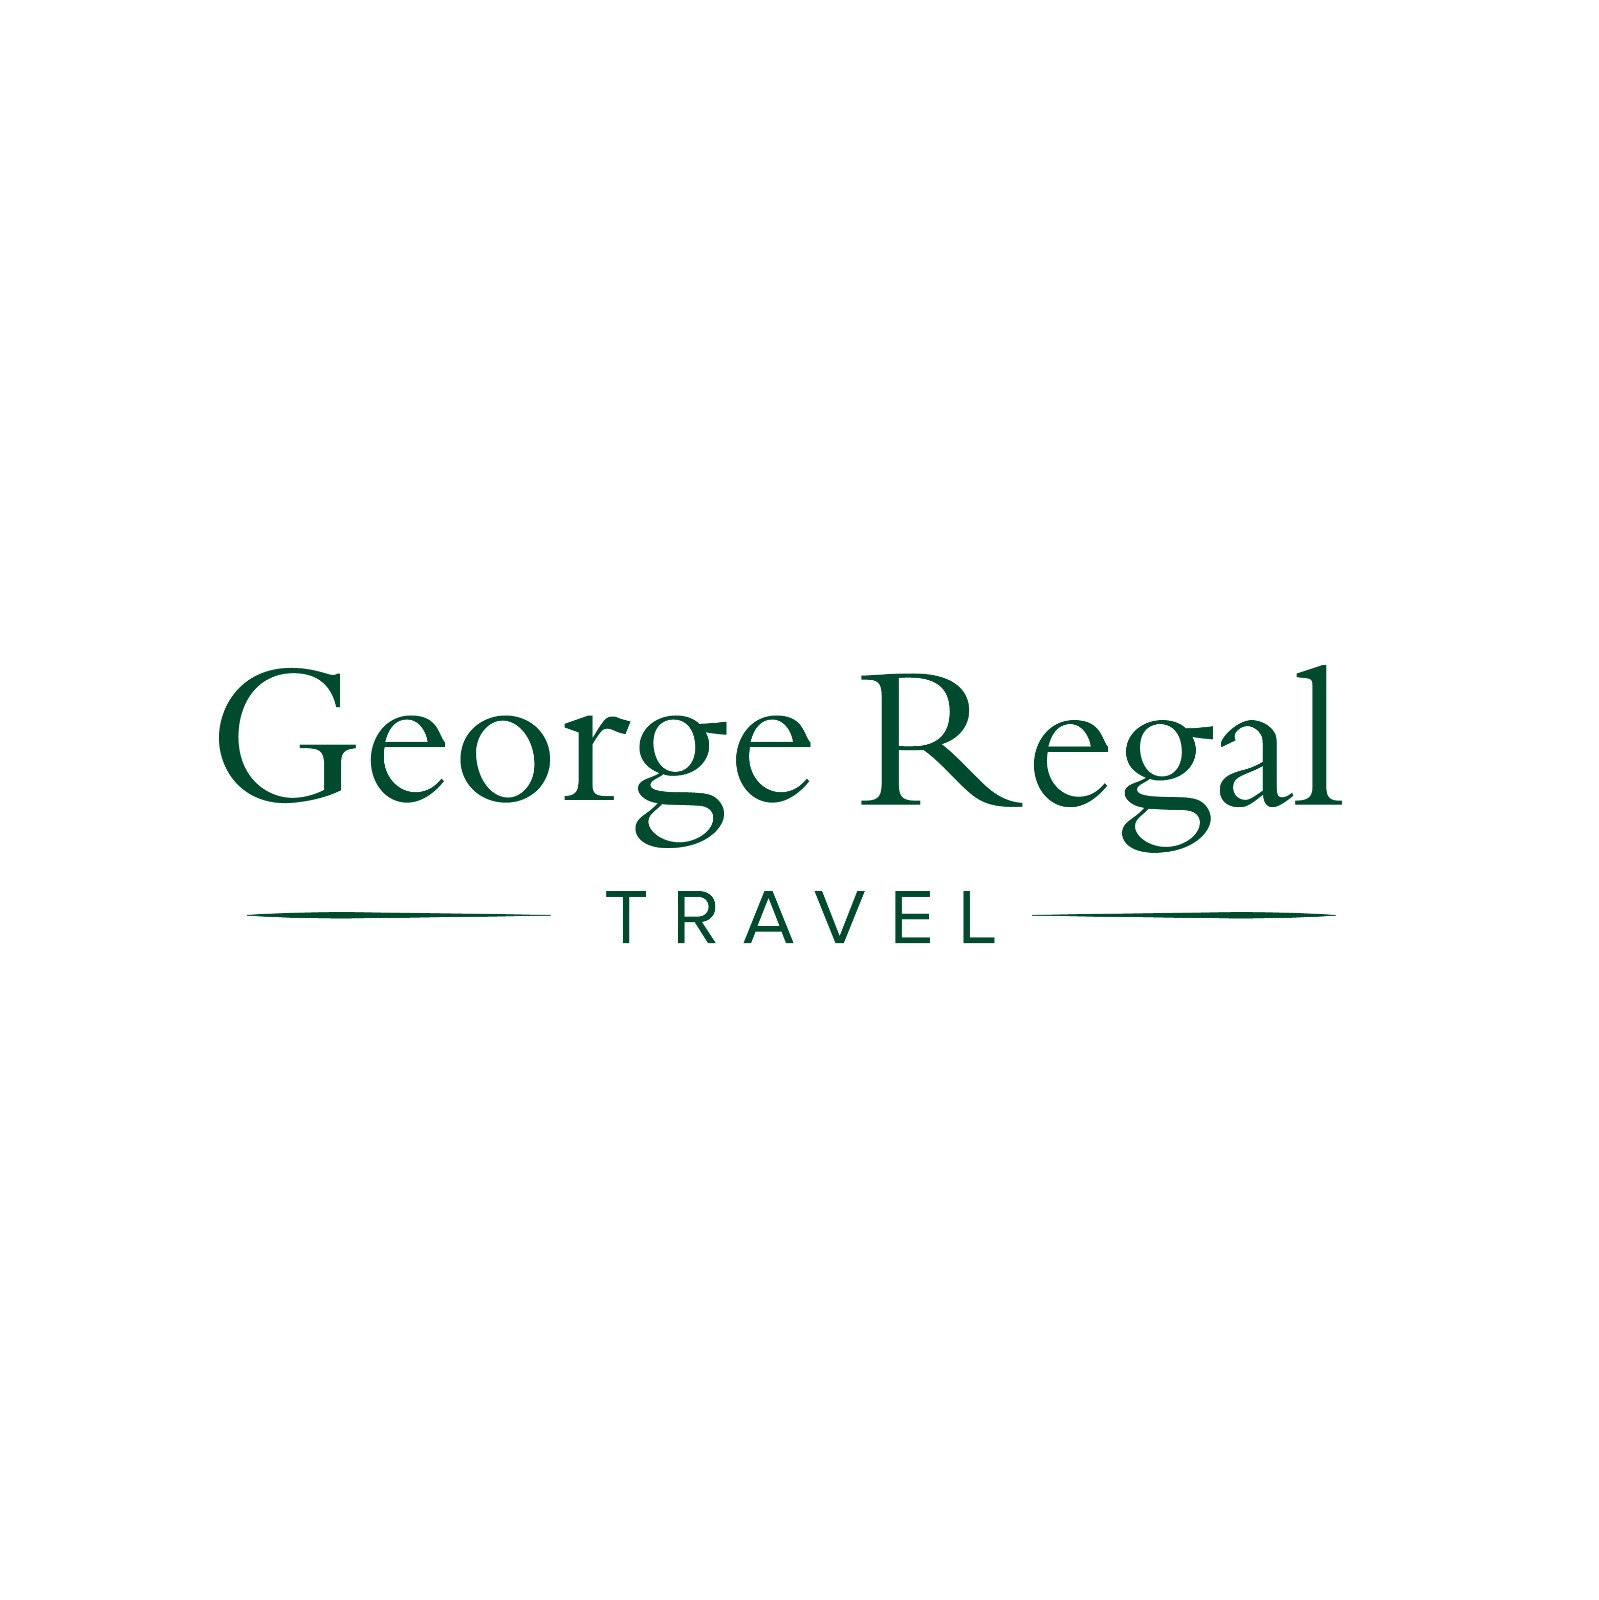 George Regal Travel